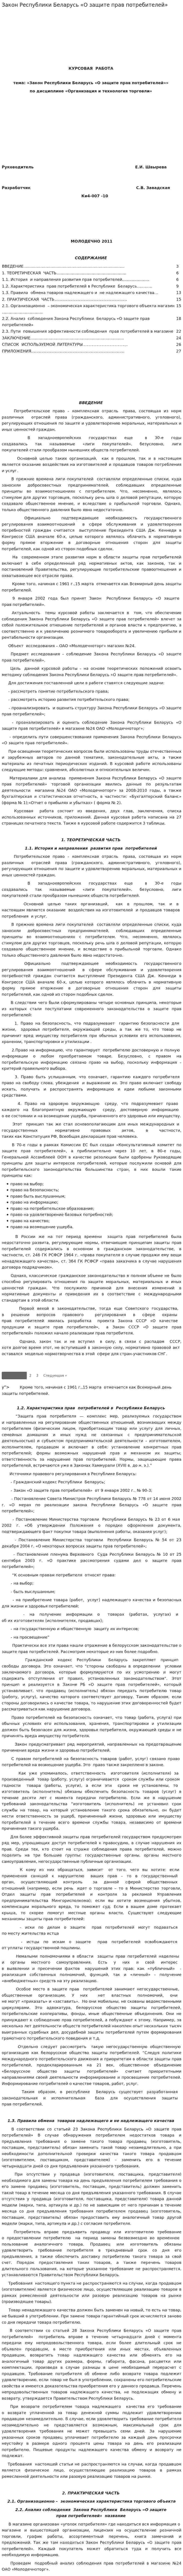 Закон Республики Беларусь «О защите прав потребителей»